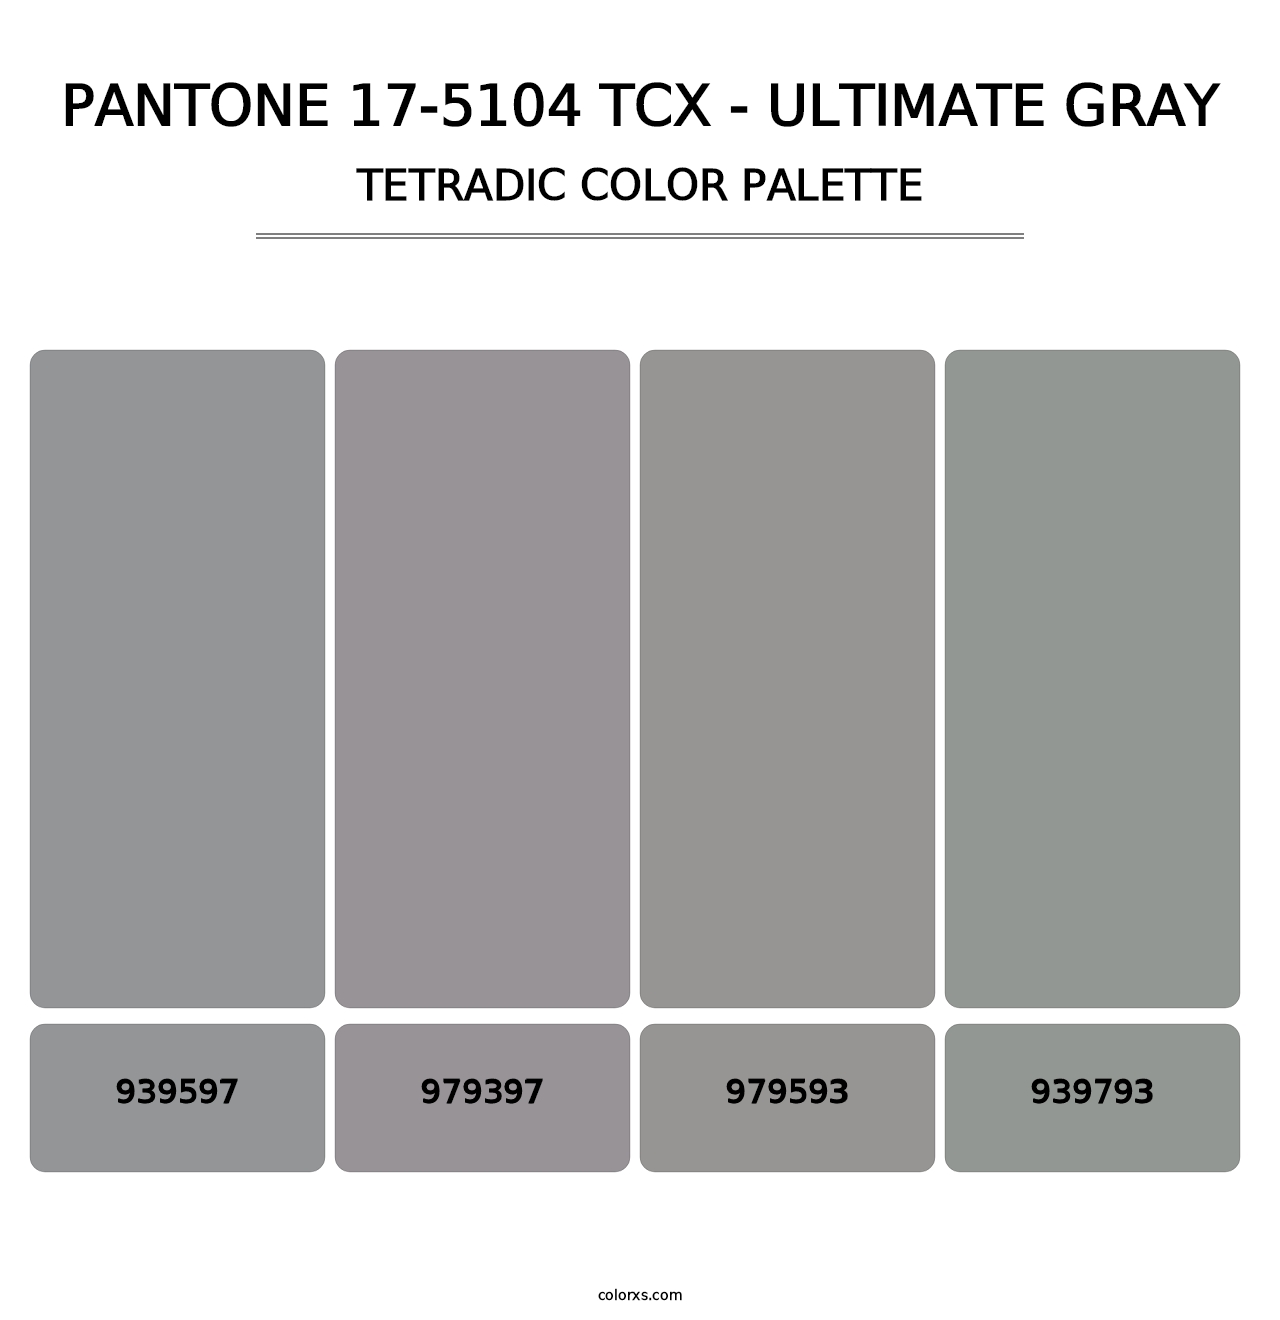 PANTONE 17-5104 TCX - Ultimate Gray - Tetradic Color Palette